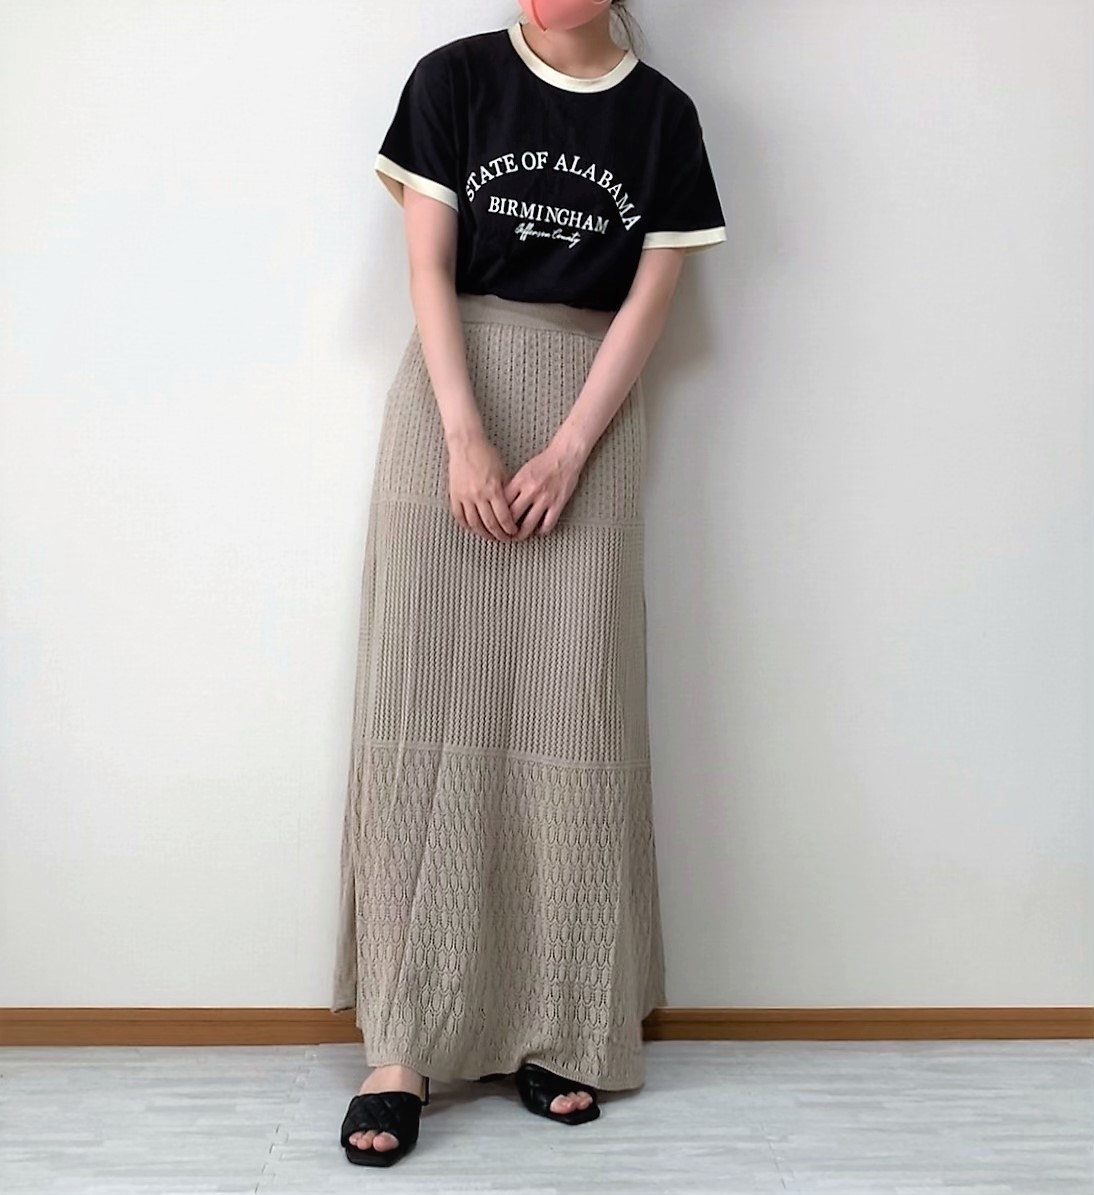 niko and...（ニコアンド）のオススメファッションアイテム「アソートロゴリンガーTシャツ」古着っぽくて可愛い 夏にサラッと着れる